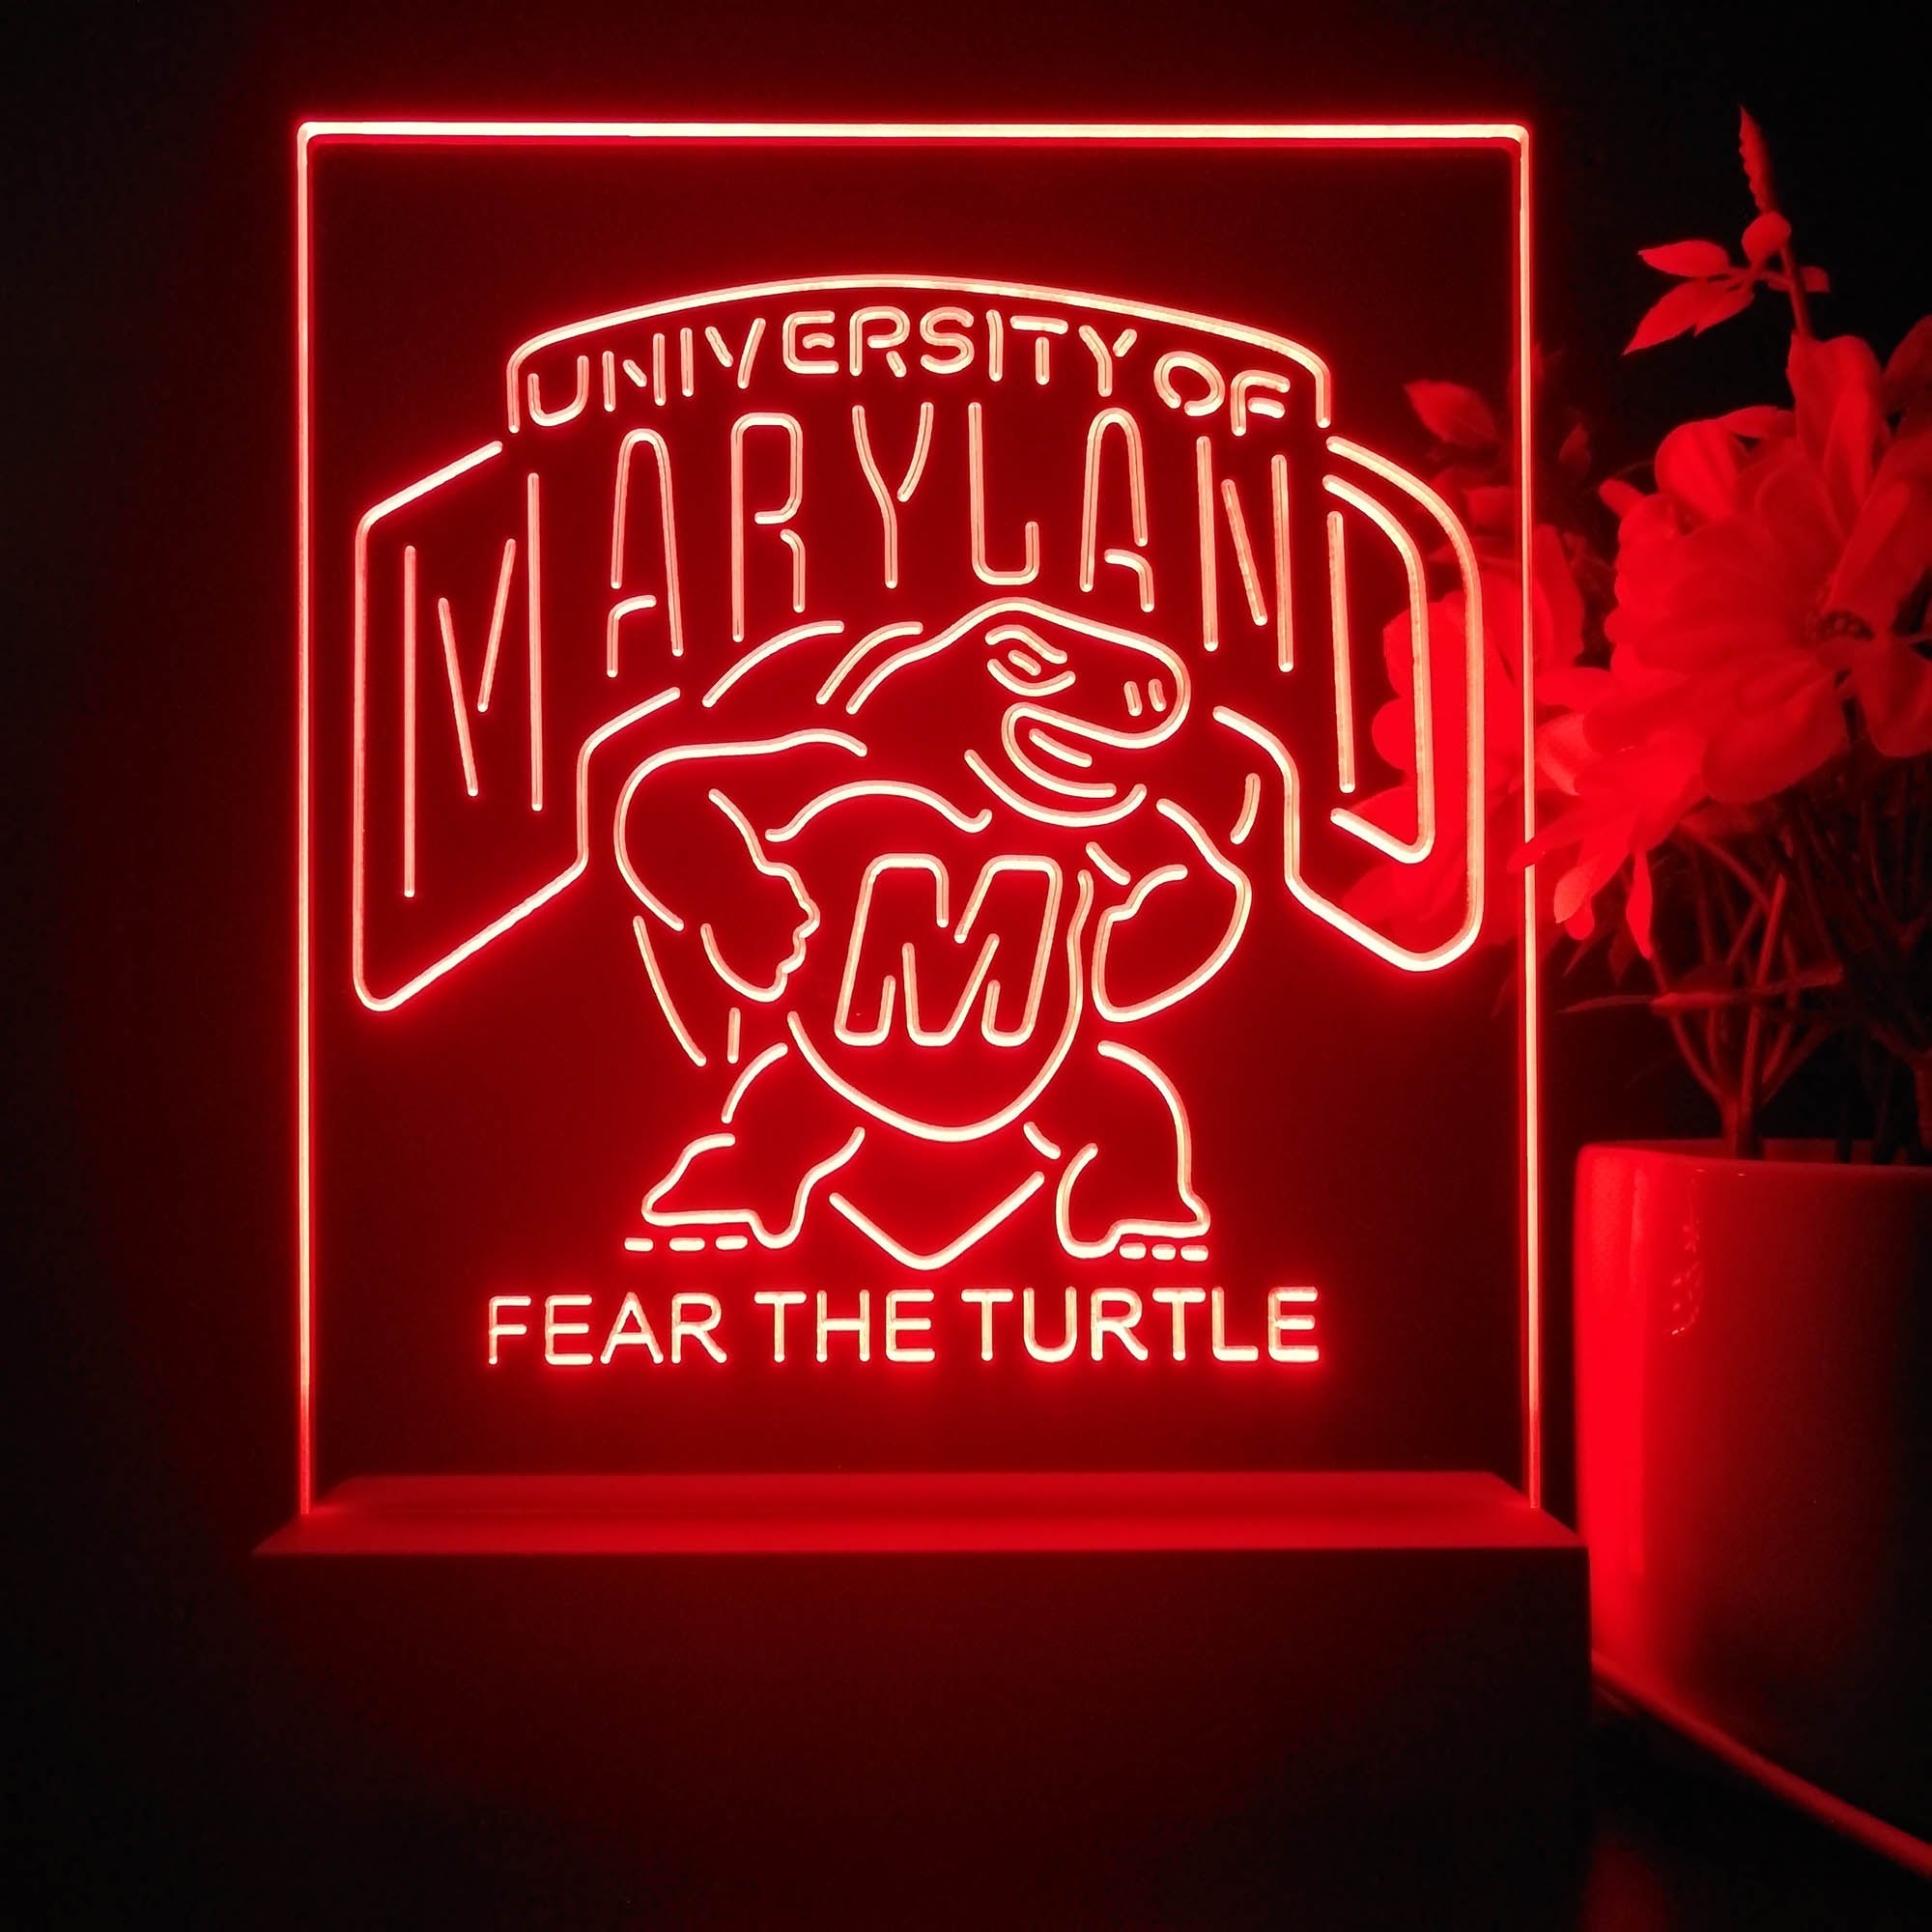 Maryland Turtle Fear The Turtle 3D Illusion Night Light Desk Lamp